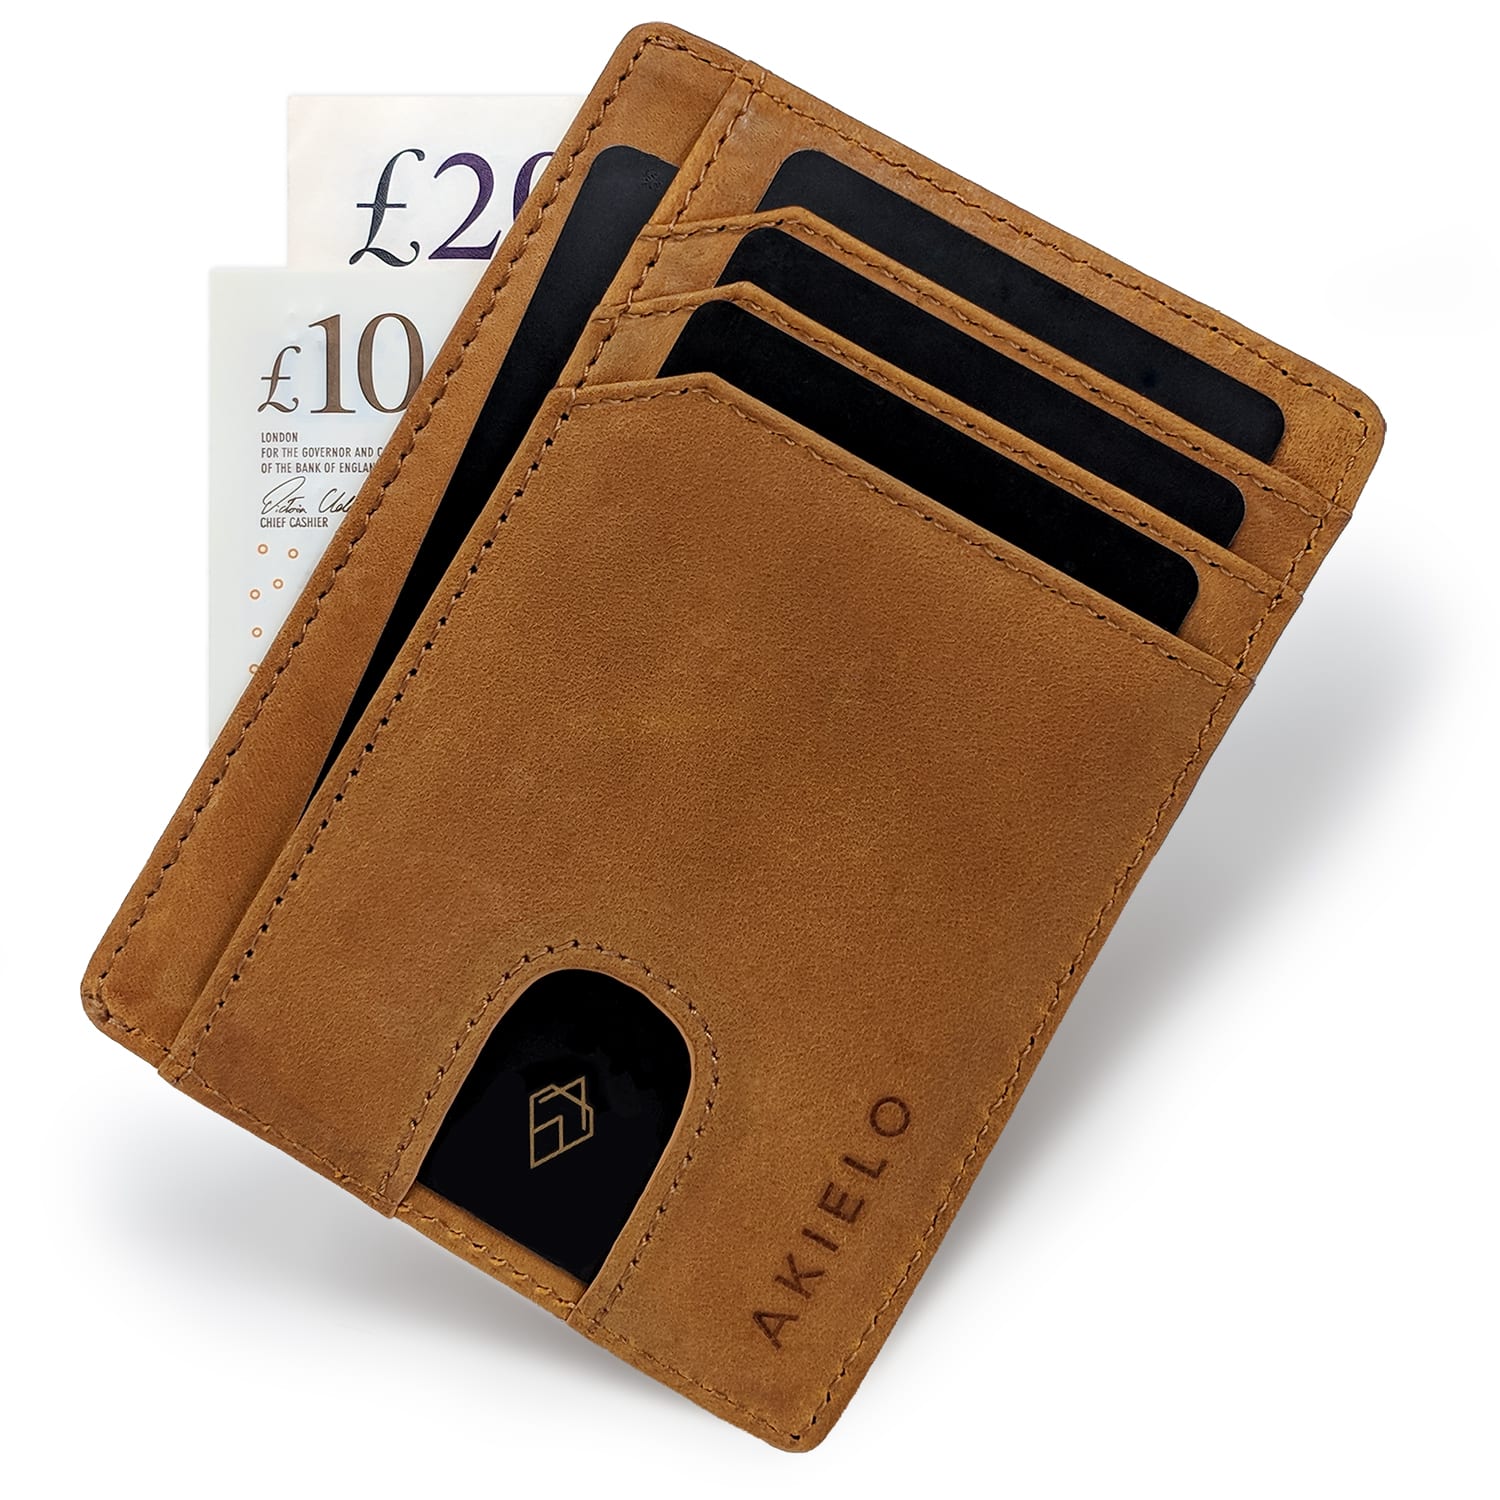 Tan RFID blocking credit card holder wallet minimalist card wallet